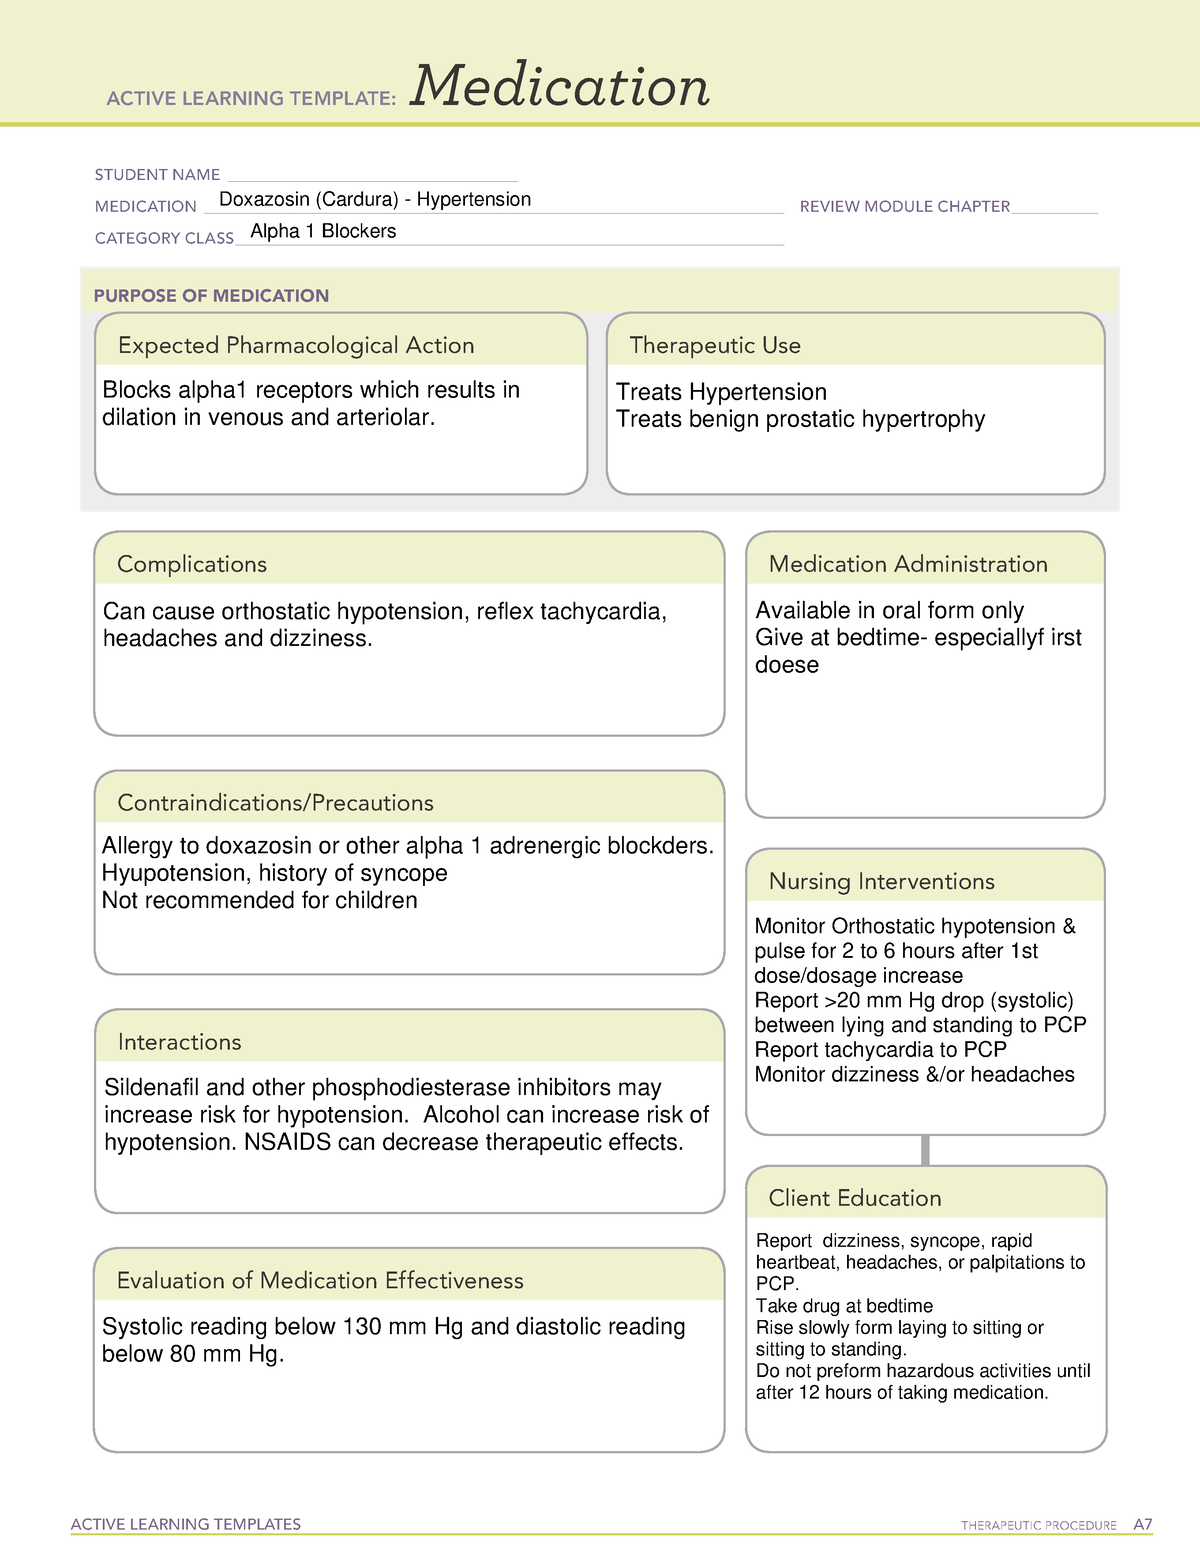 ati-doxazosin-cardura-alpha-1-blocker-med-sheet-active-learning